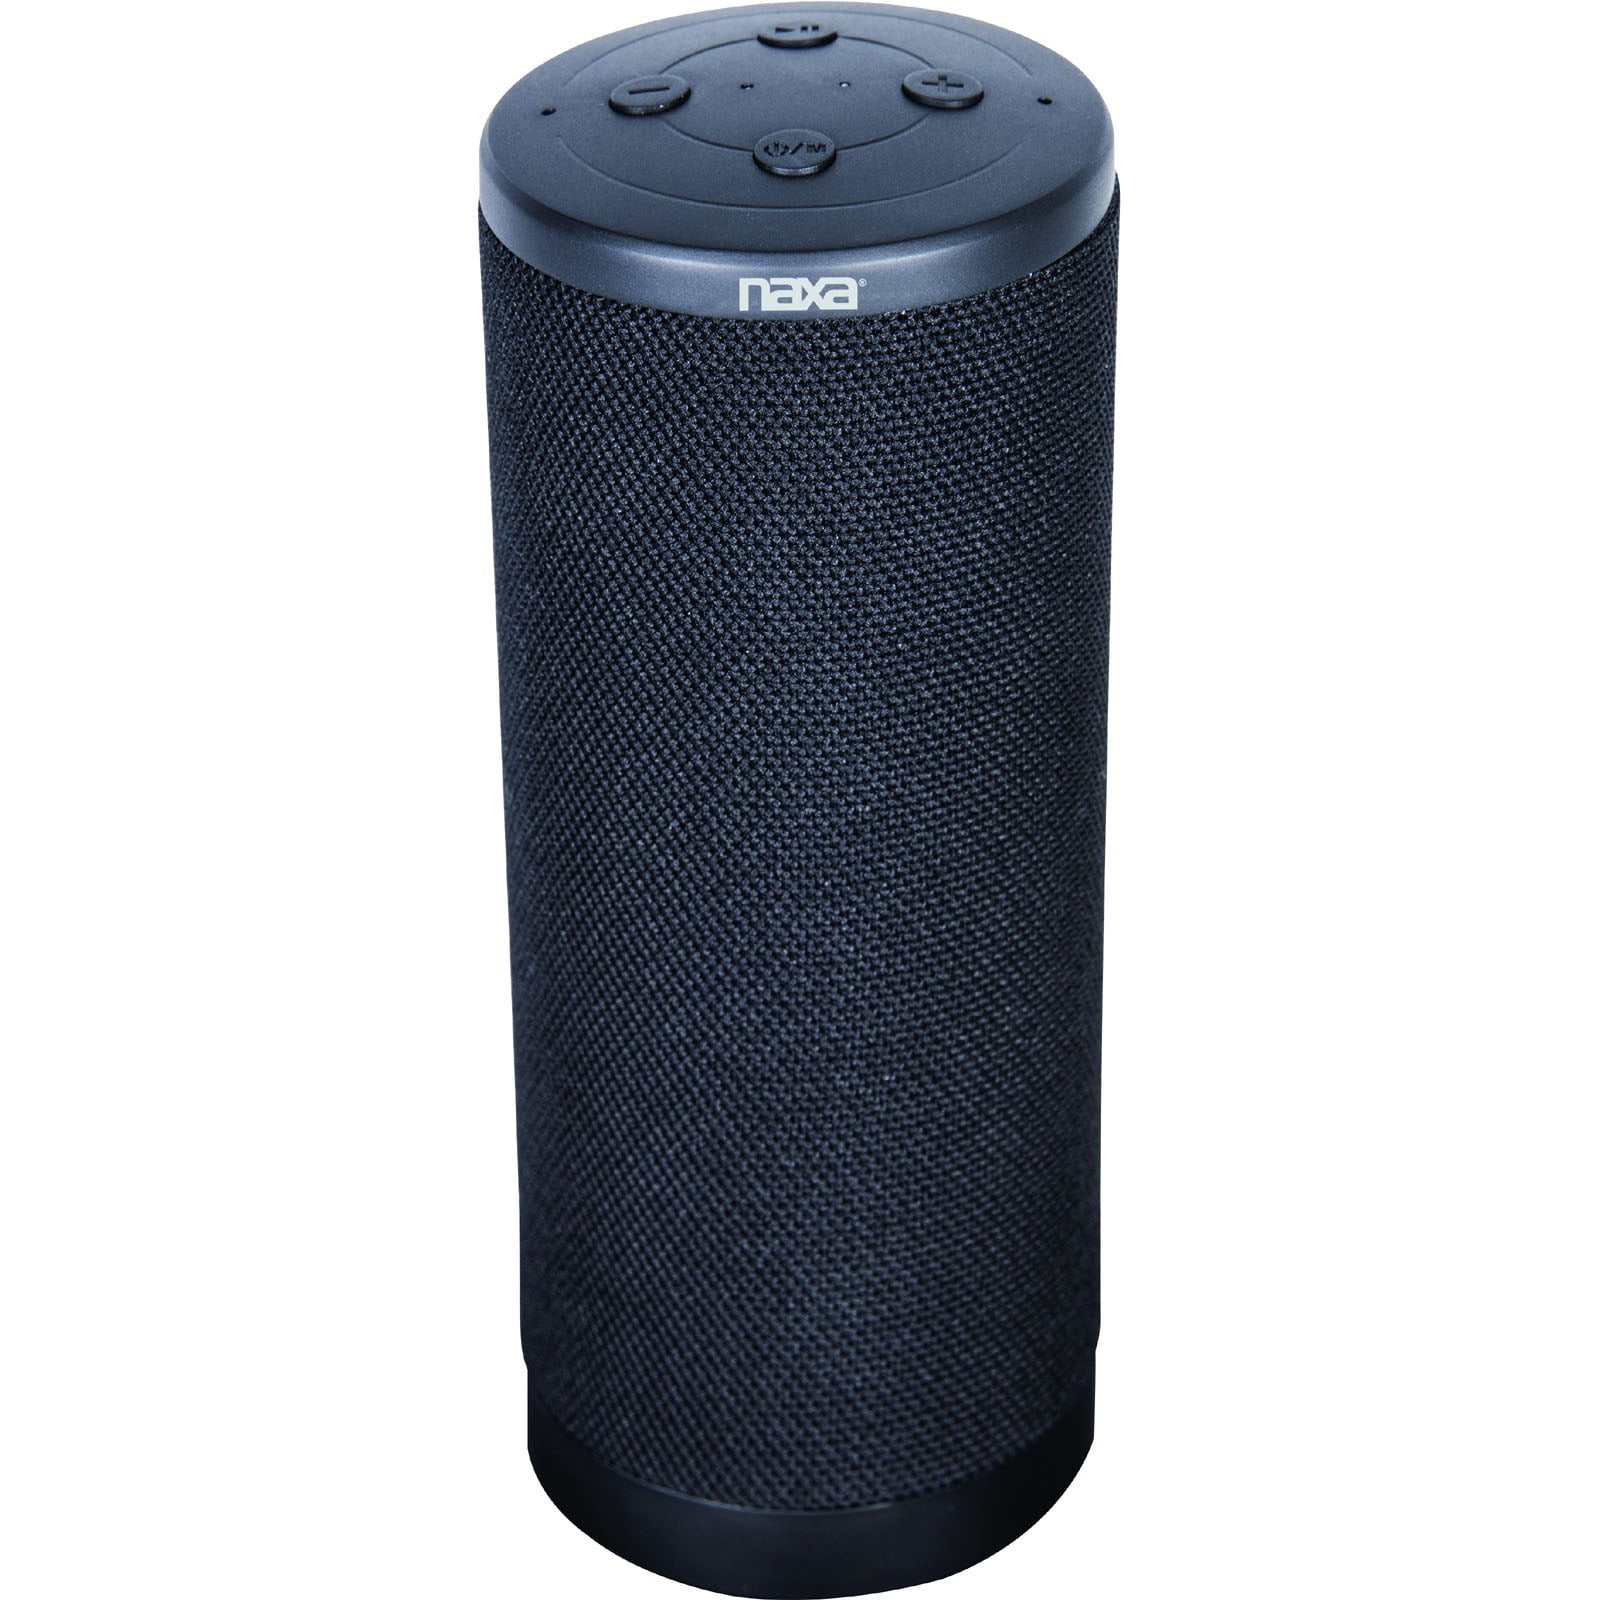 voice command bluetooth speaker